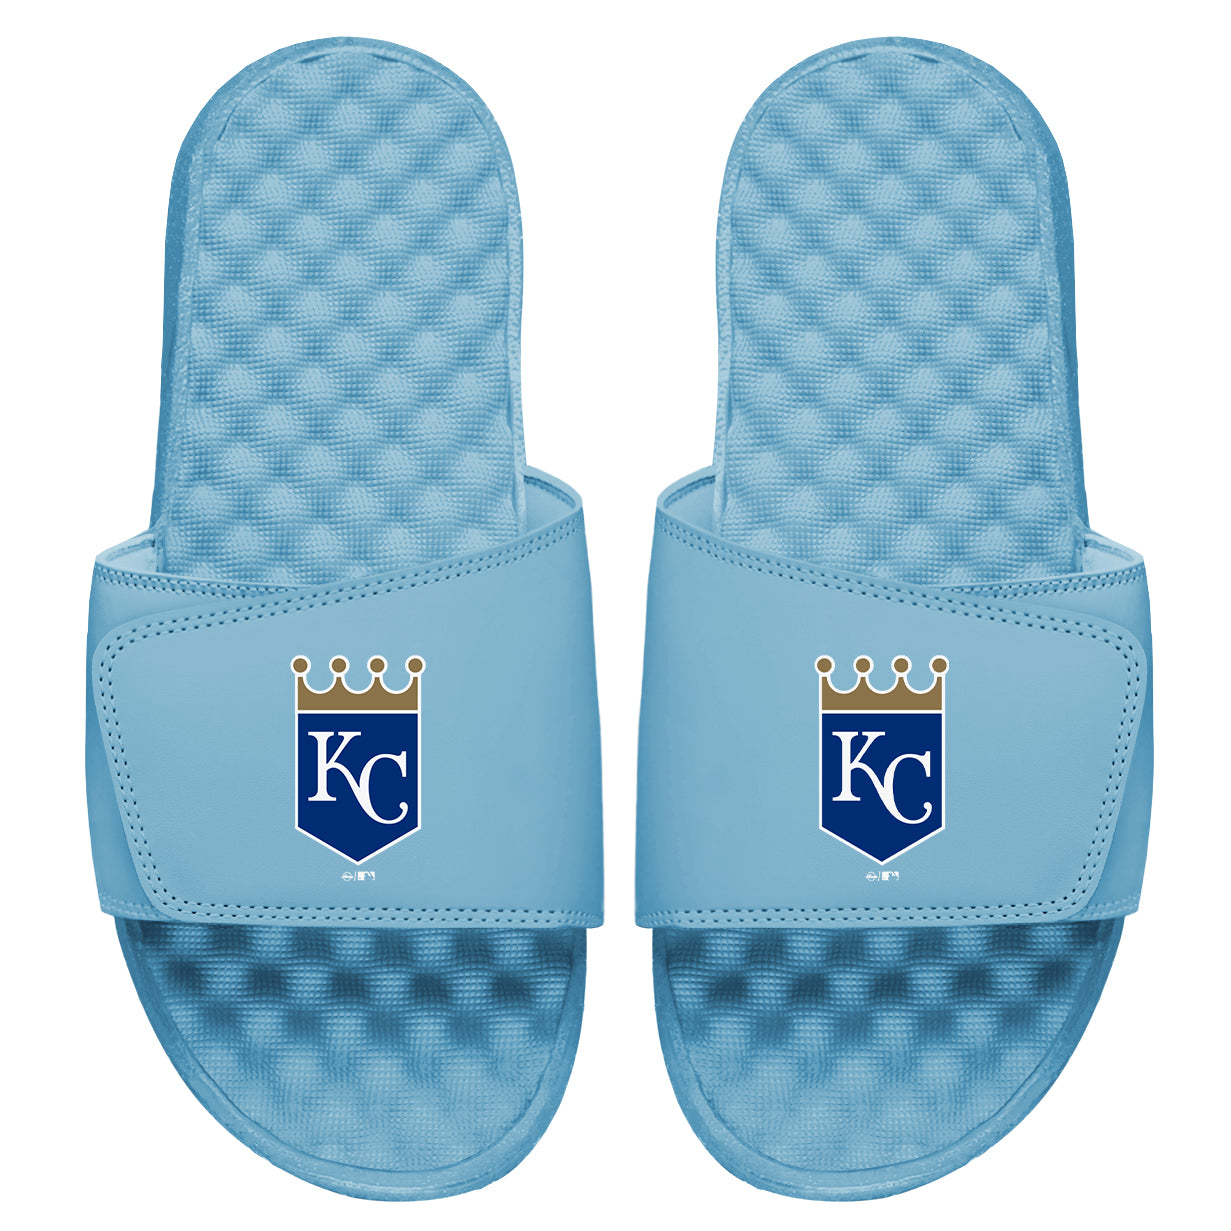 Royals Primary UNC Blue Slides